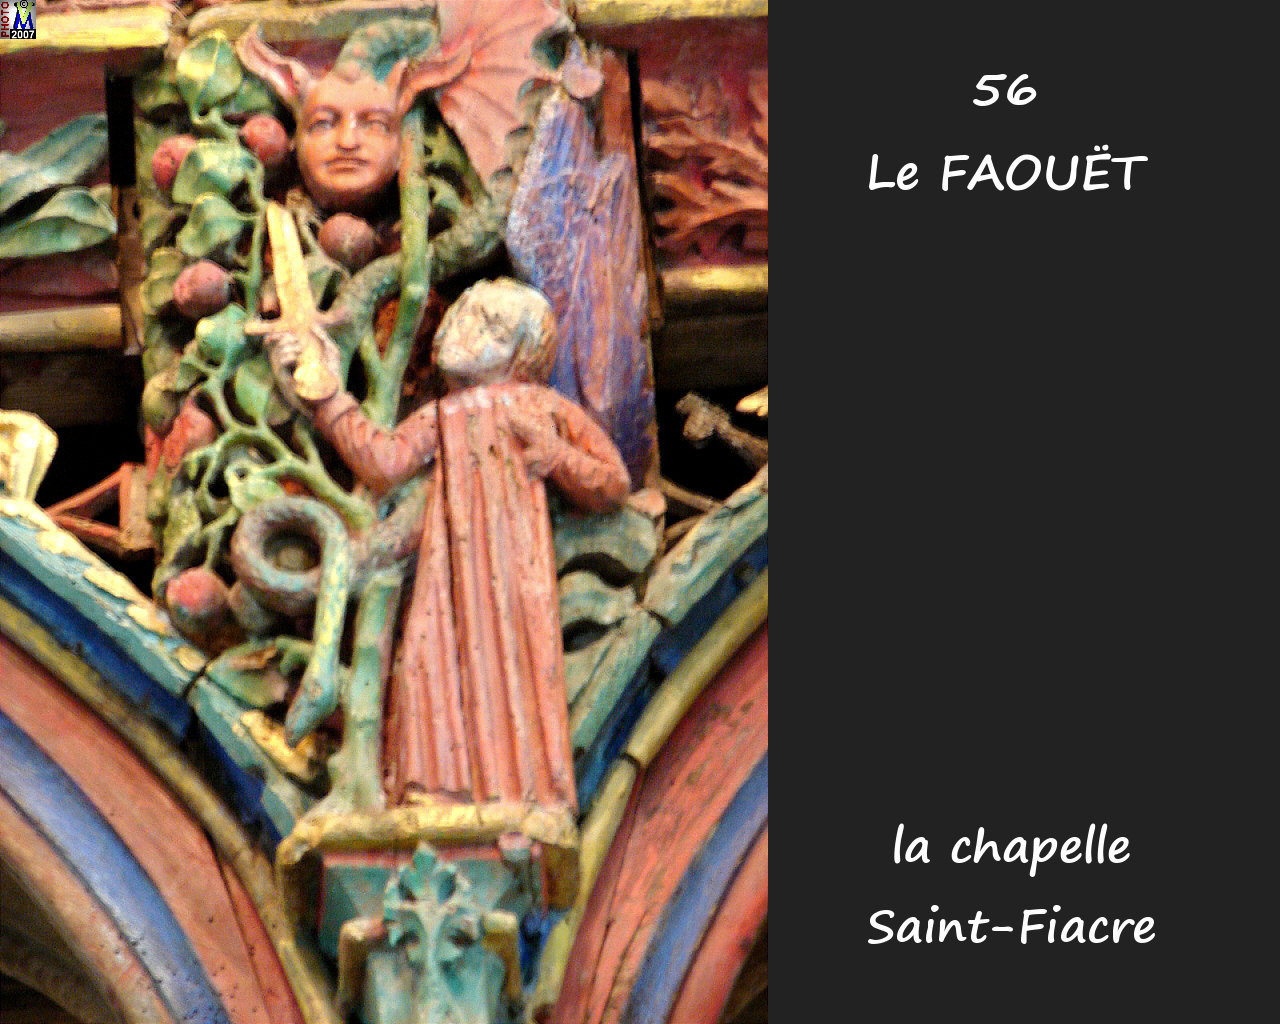 56FAOUET_chapelle-fiacre_220.jpg